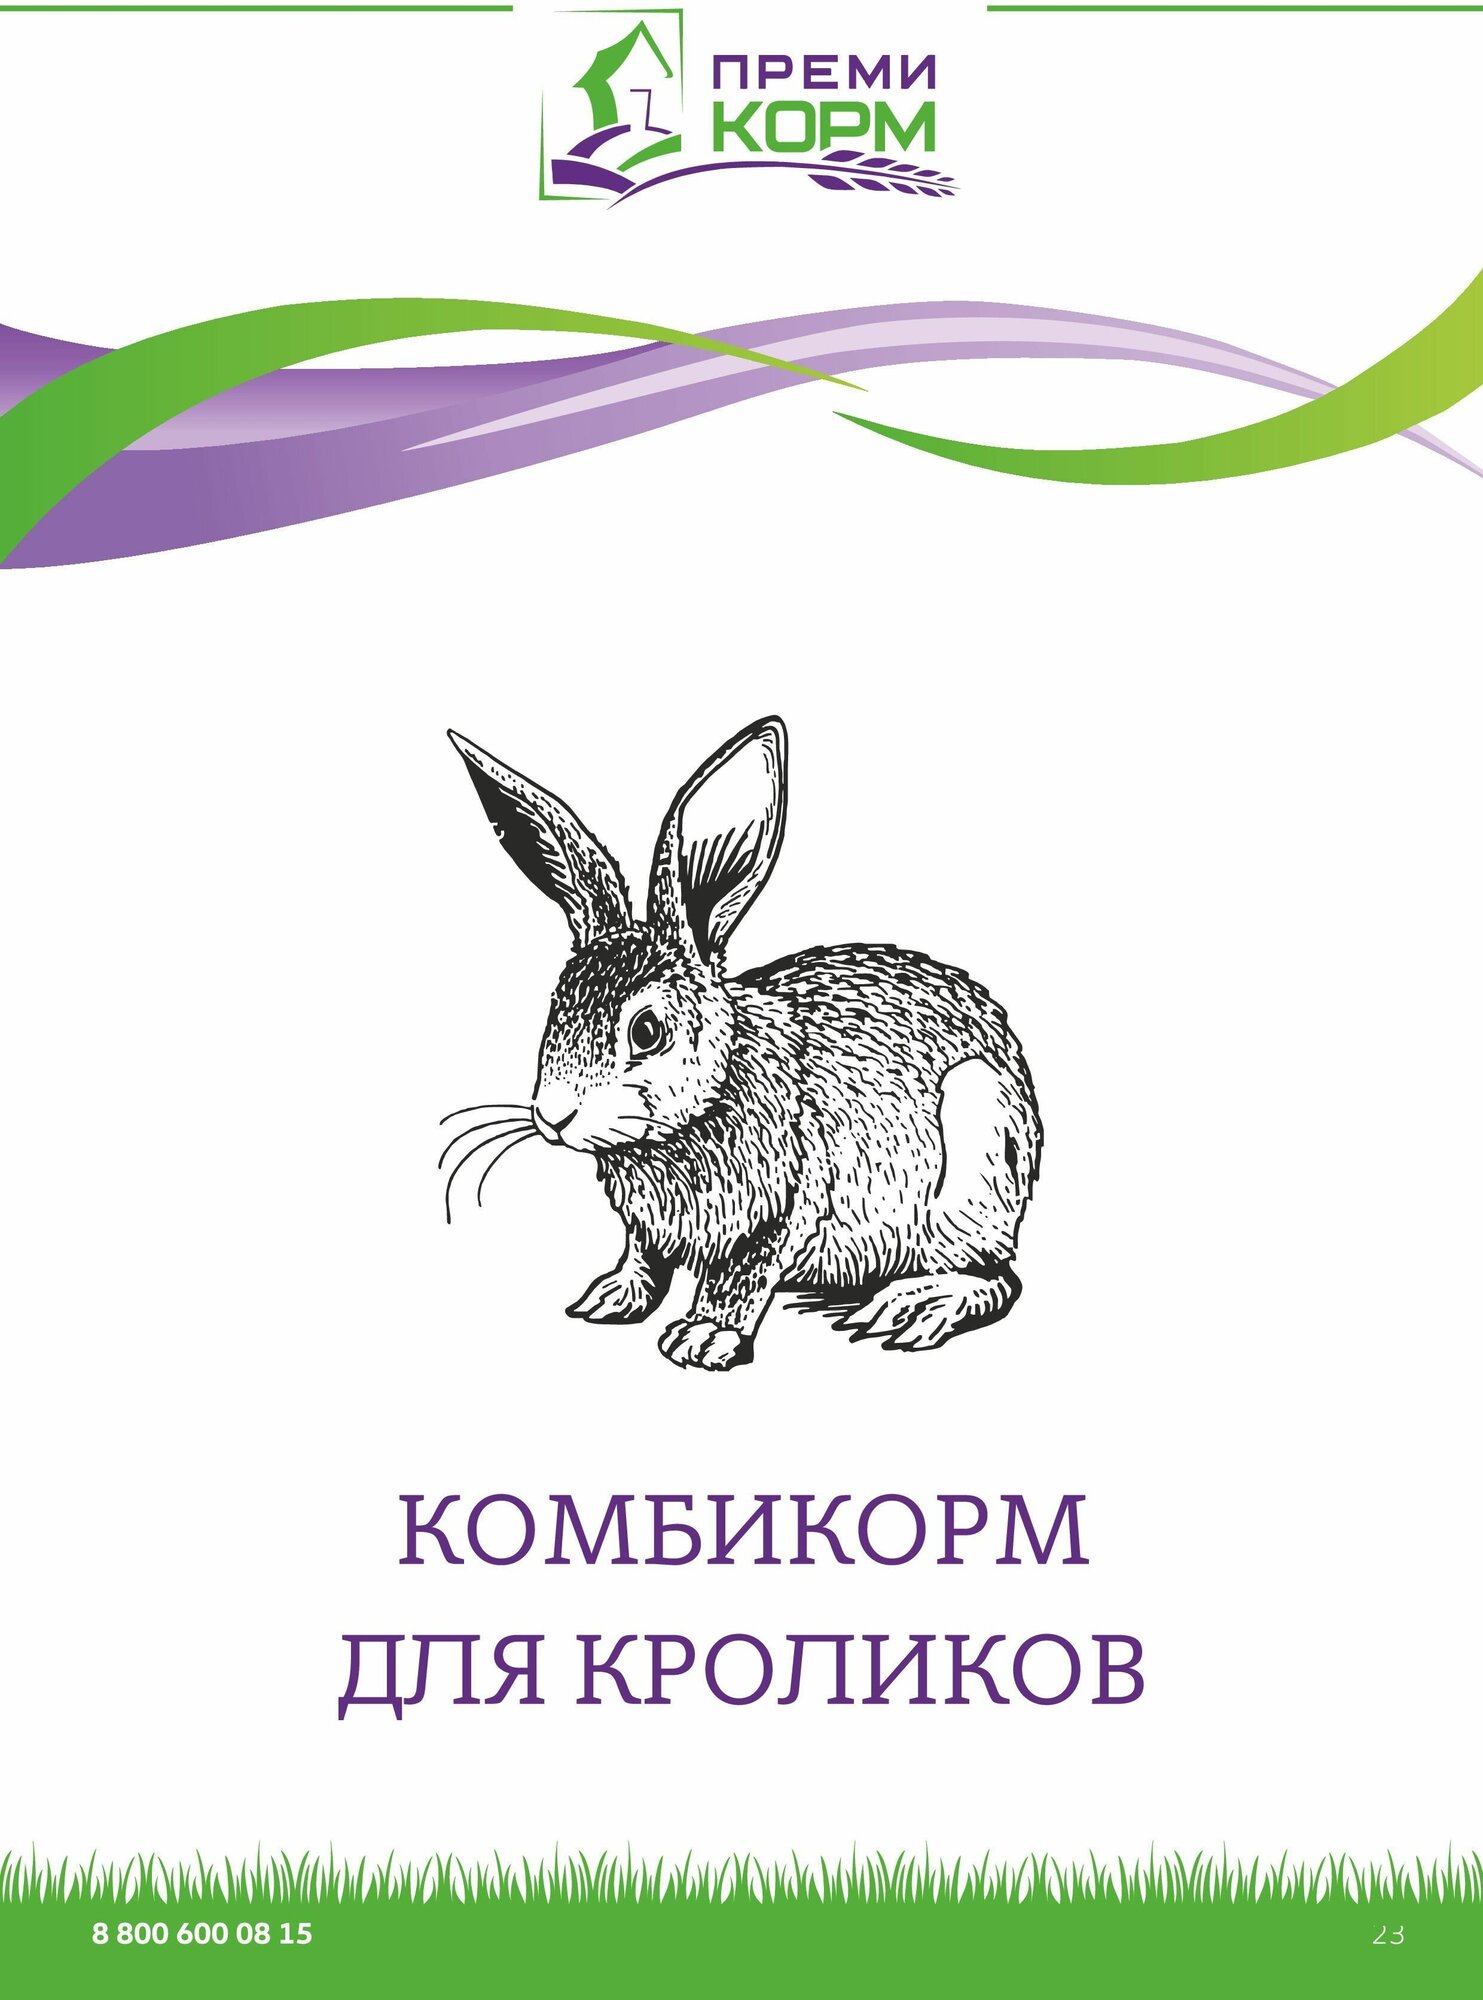 Комбикорм для кроликов ПЗК-94-1 Баланс Премикорм - фотография № 1